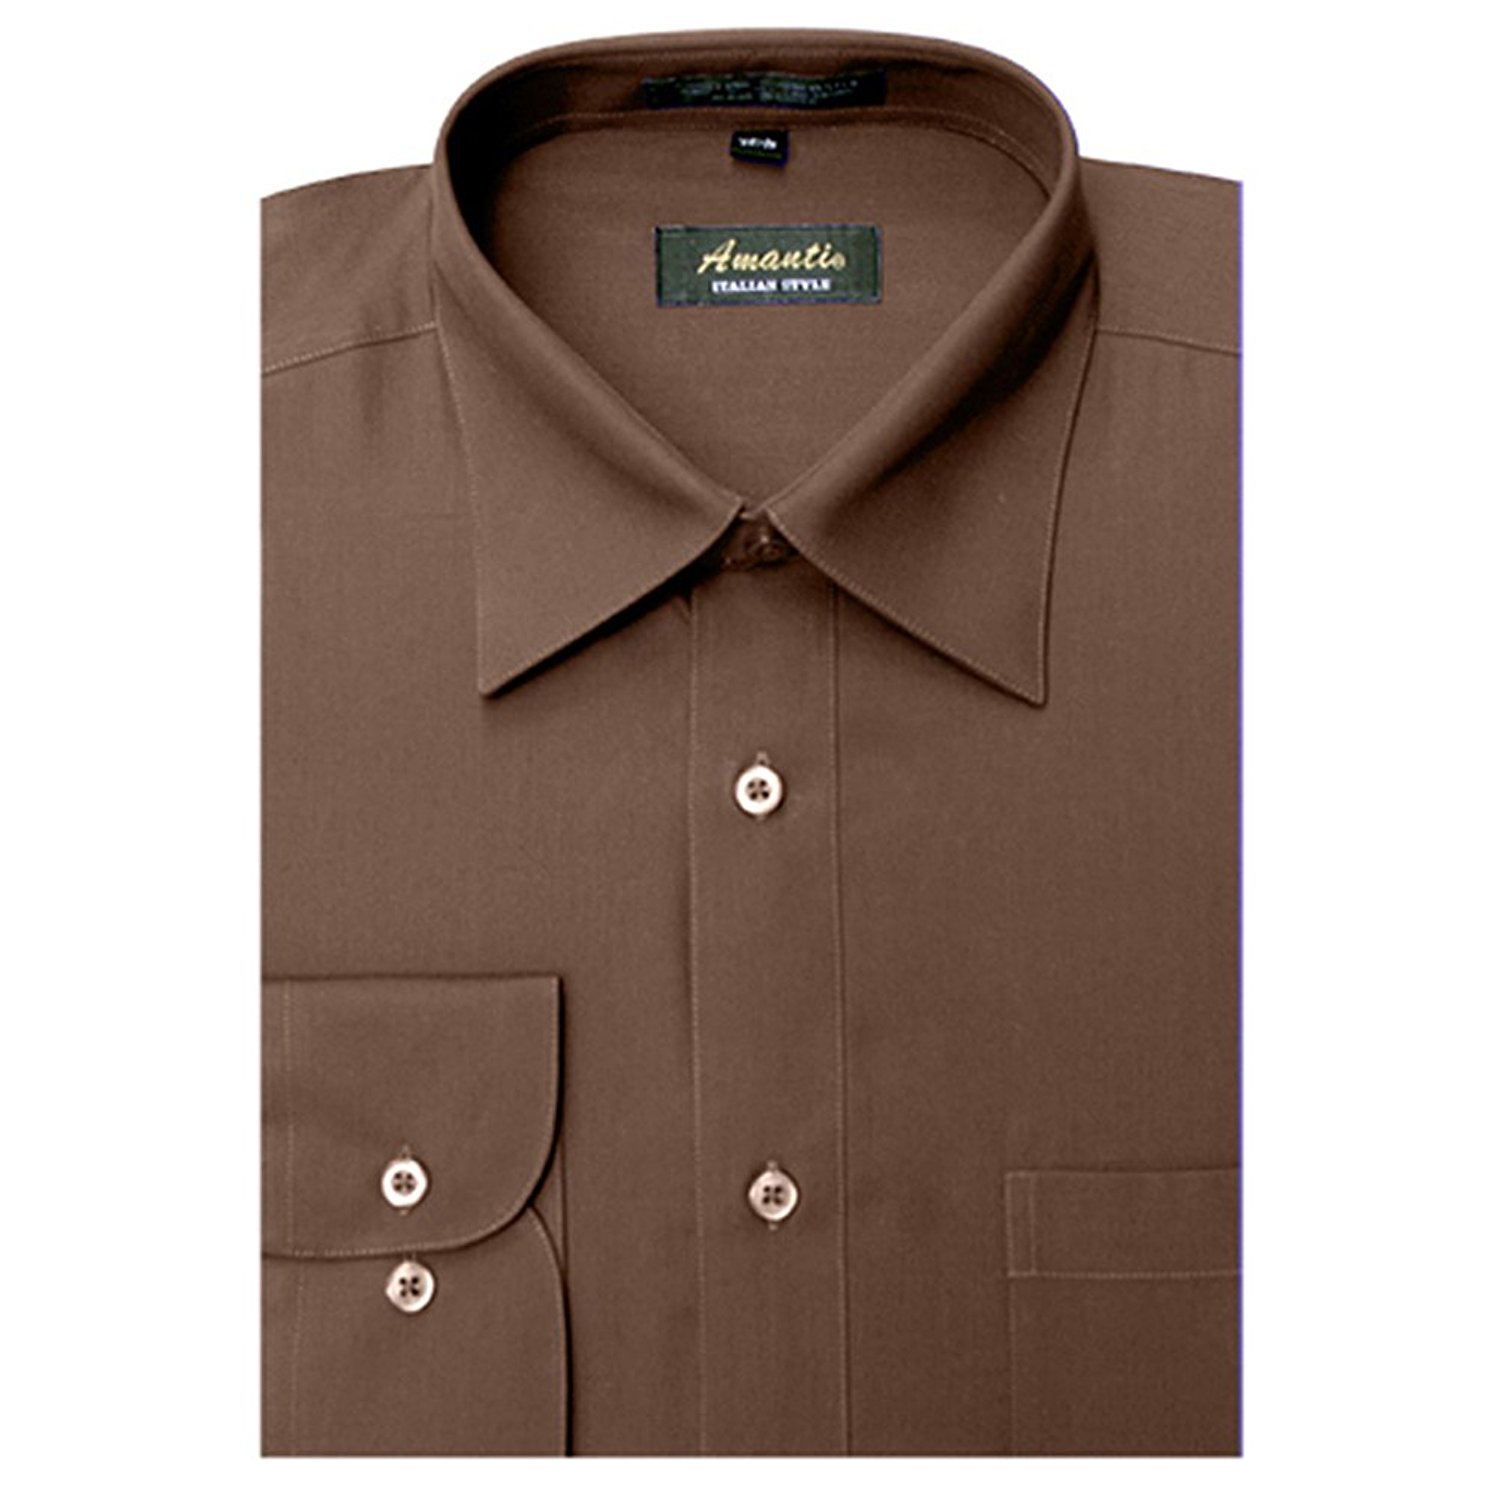 Amanti Brown Colored Men's Dress Shirt Long Sleeve Convertible 17.5 ...